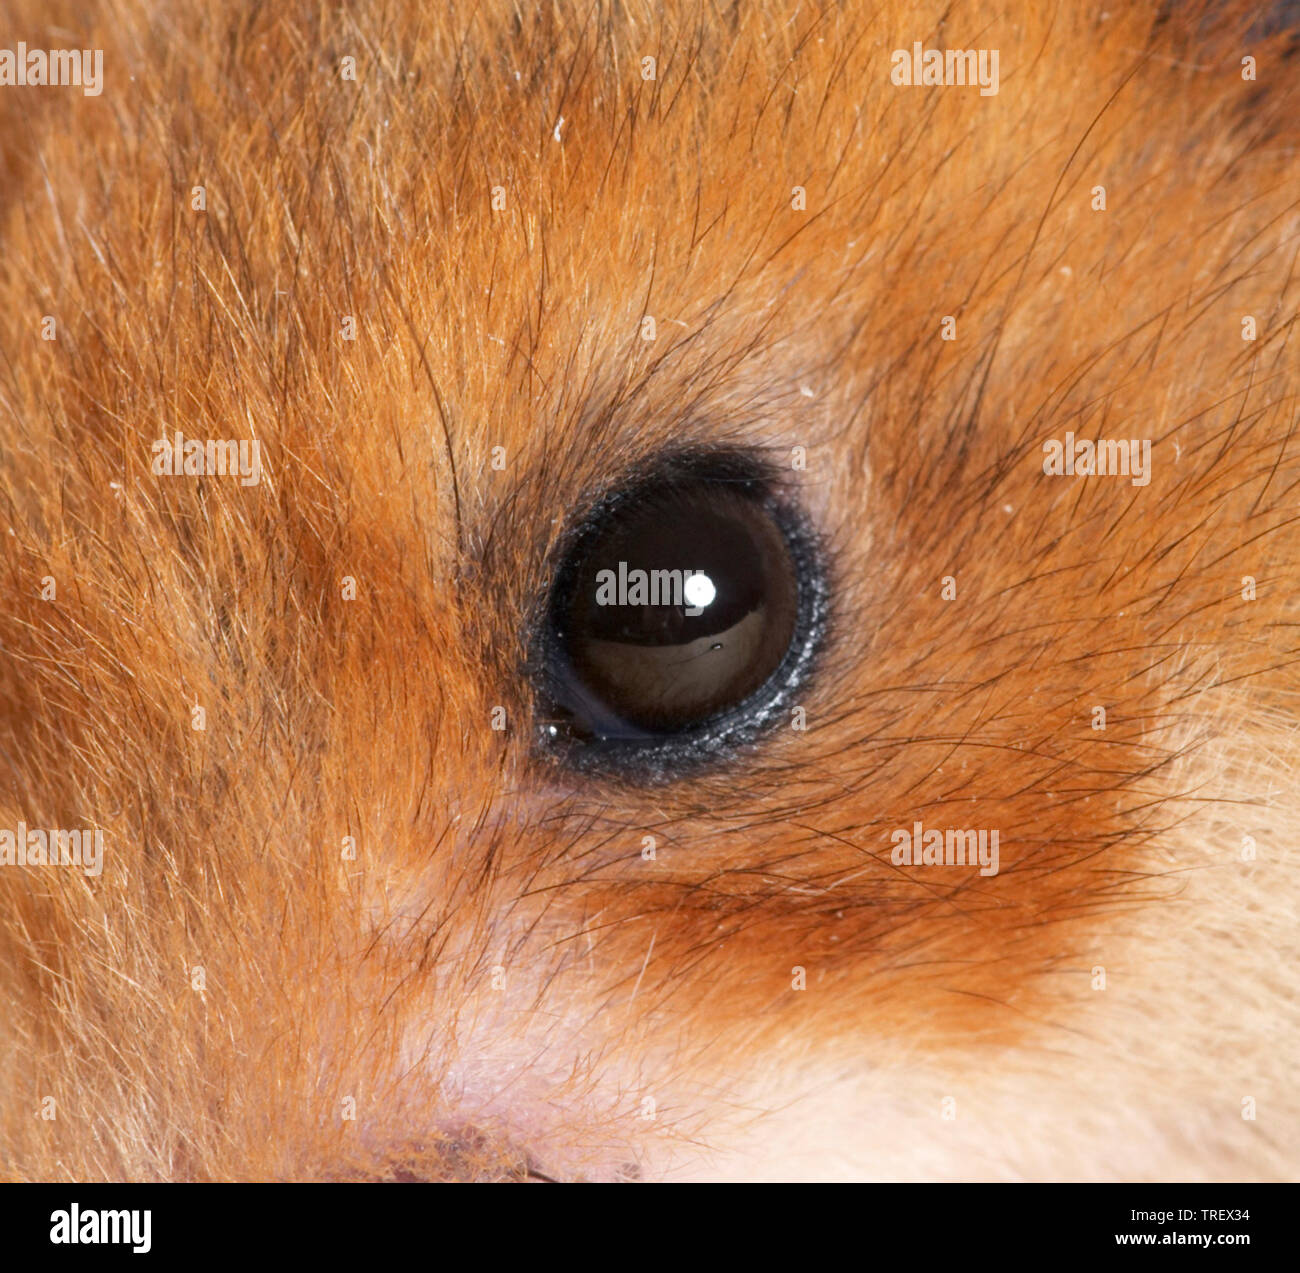 Golden Hamster (Mesocricetus auratus), Detail des Auges. Deutschland Stockfoto